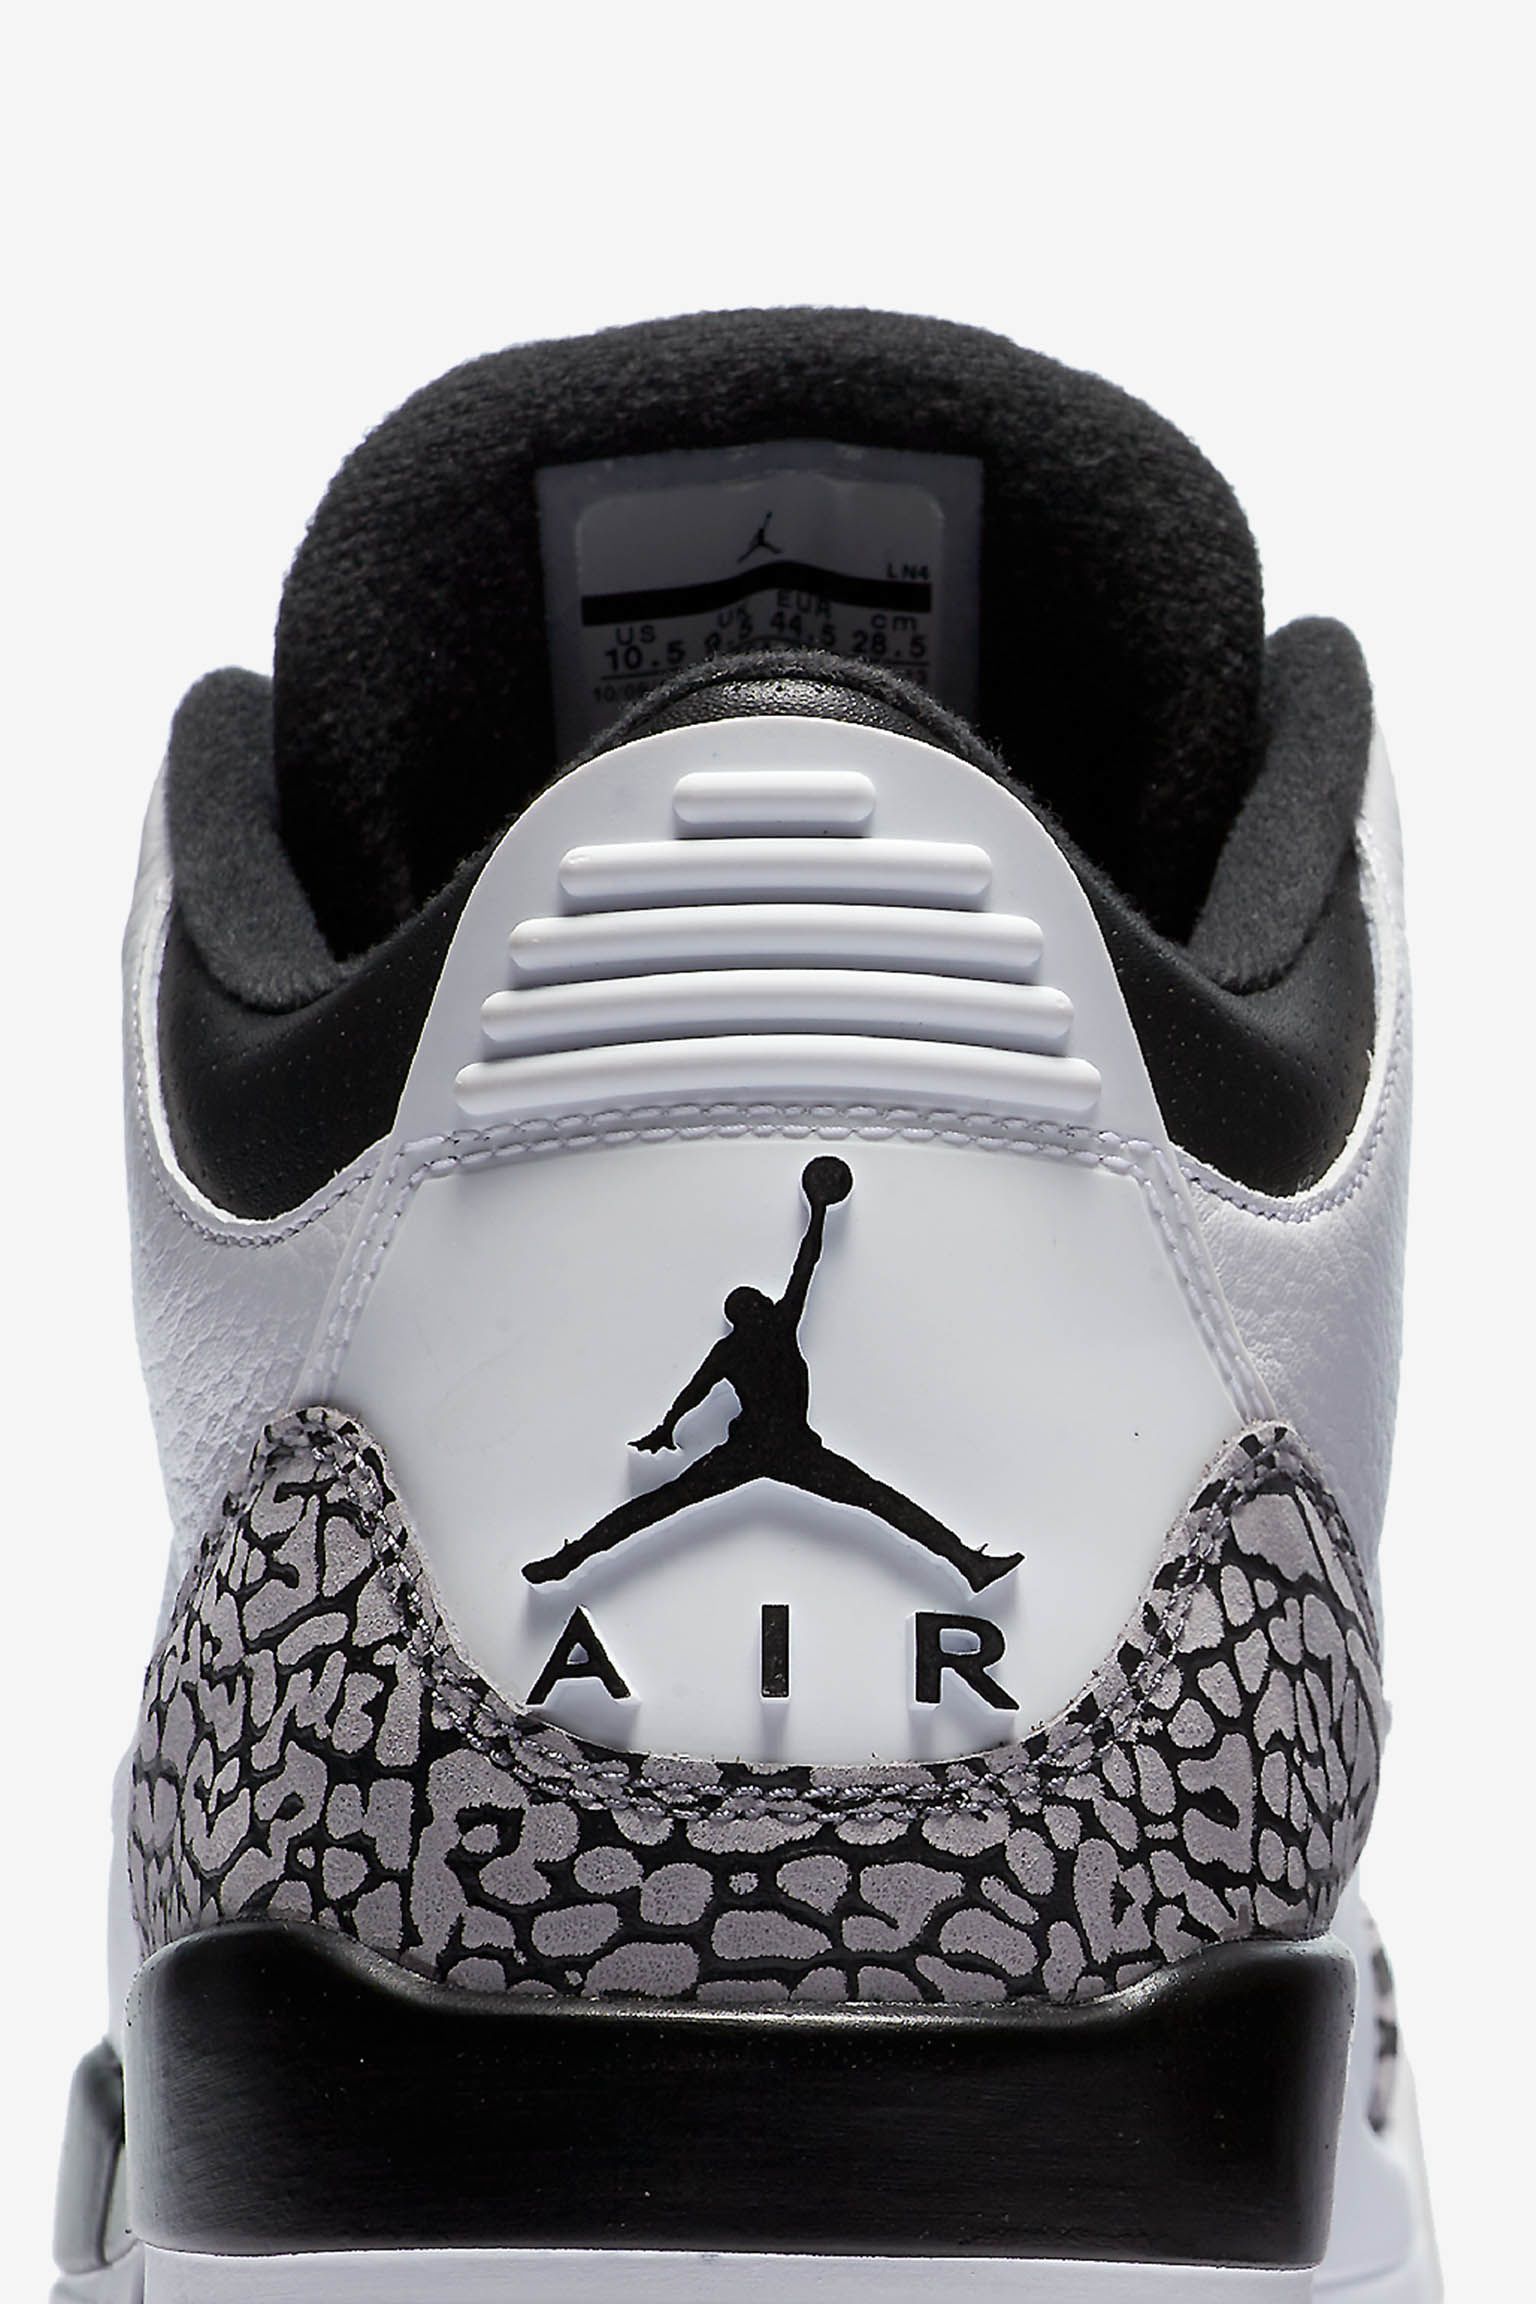 Nike Jordan Retro 23 | peacecommission.kdsg.gov.ng